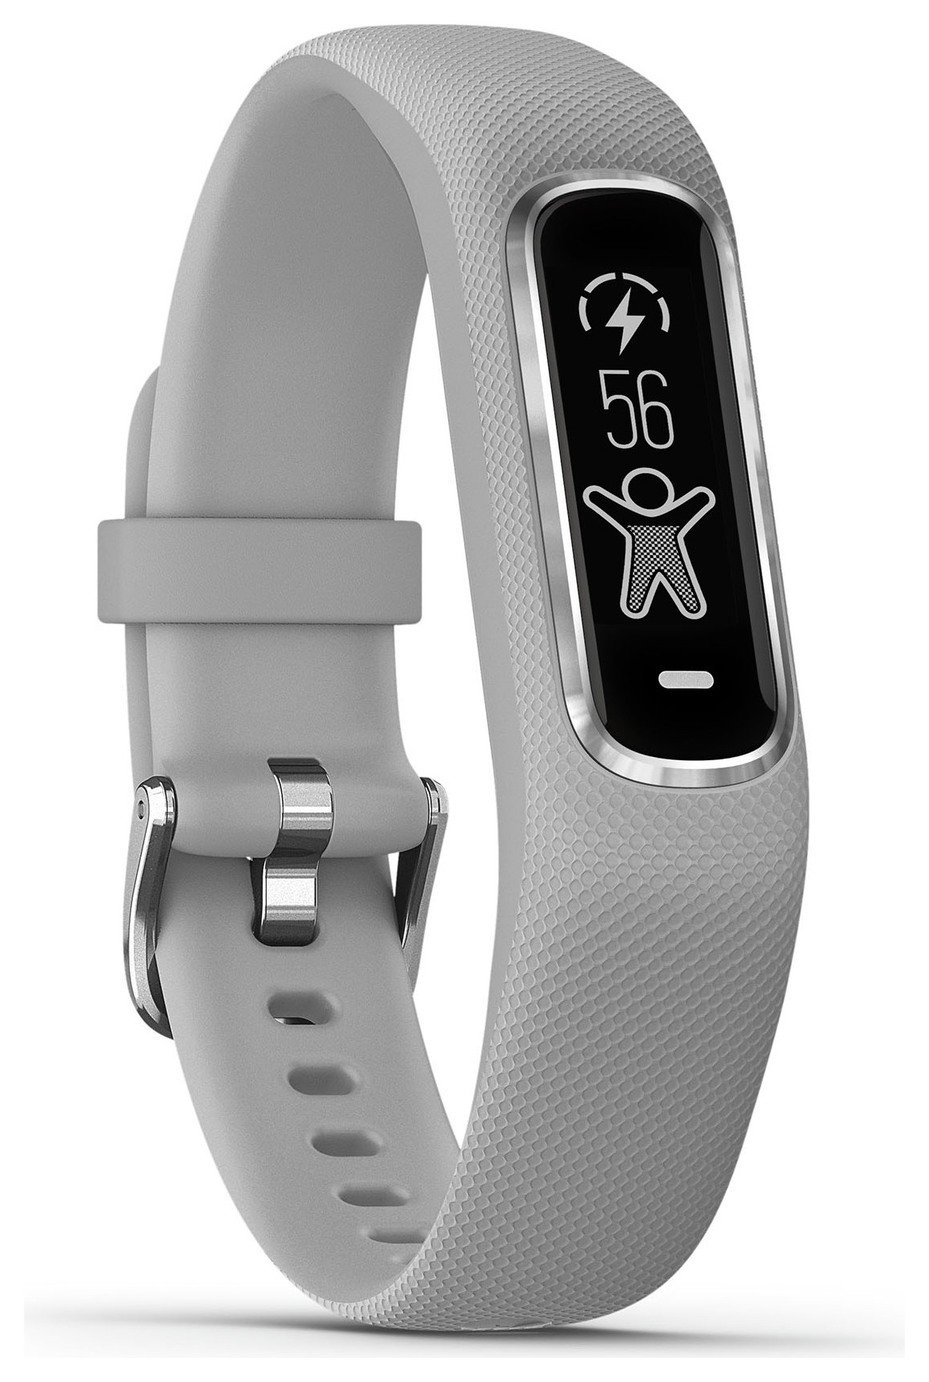 Garmin Vivosmart 4 Small Smart Watch - Silver